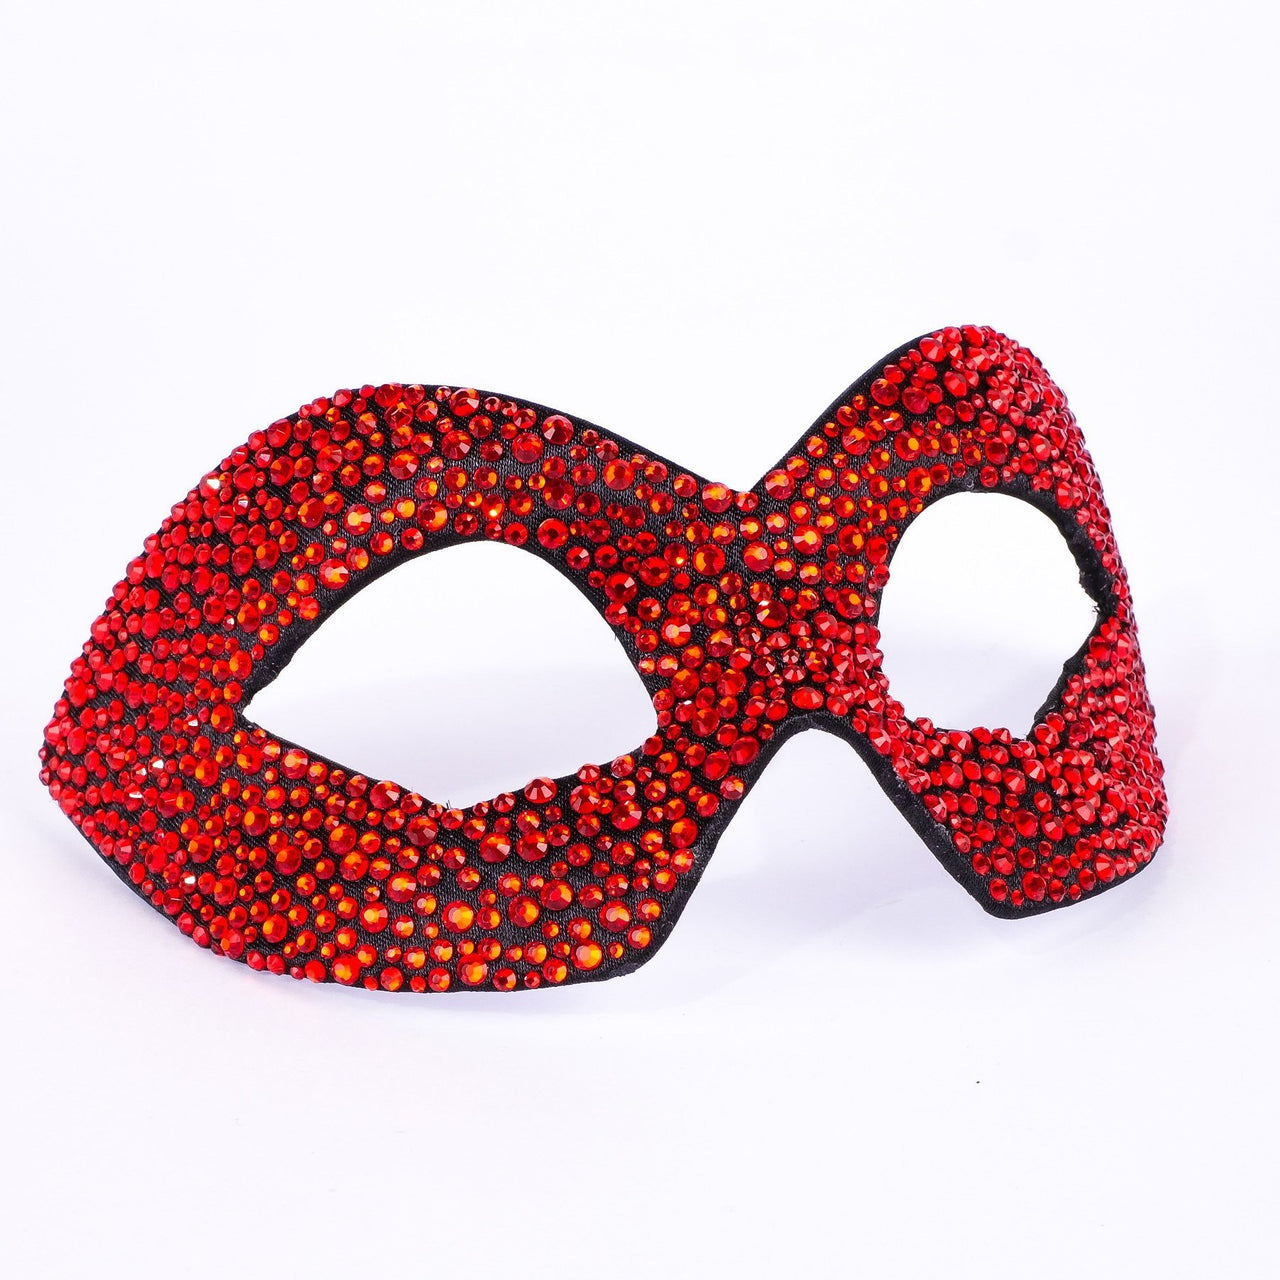 Hero Strass Red Black Masquerade Mask